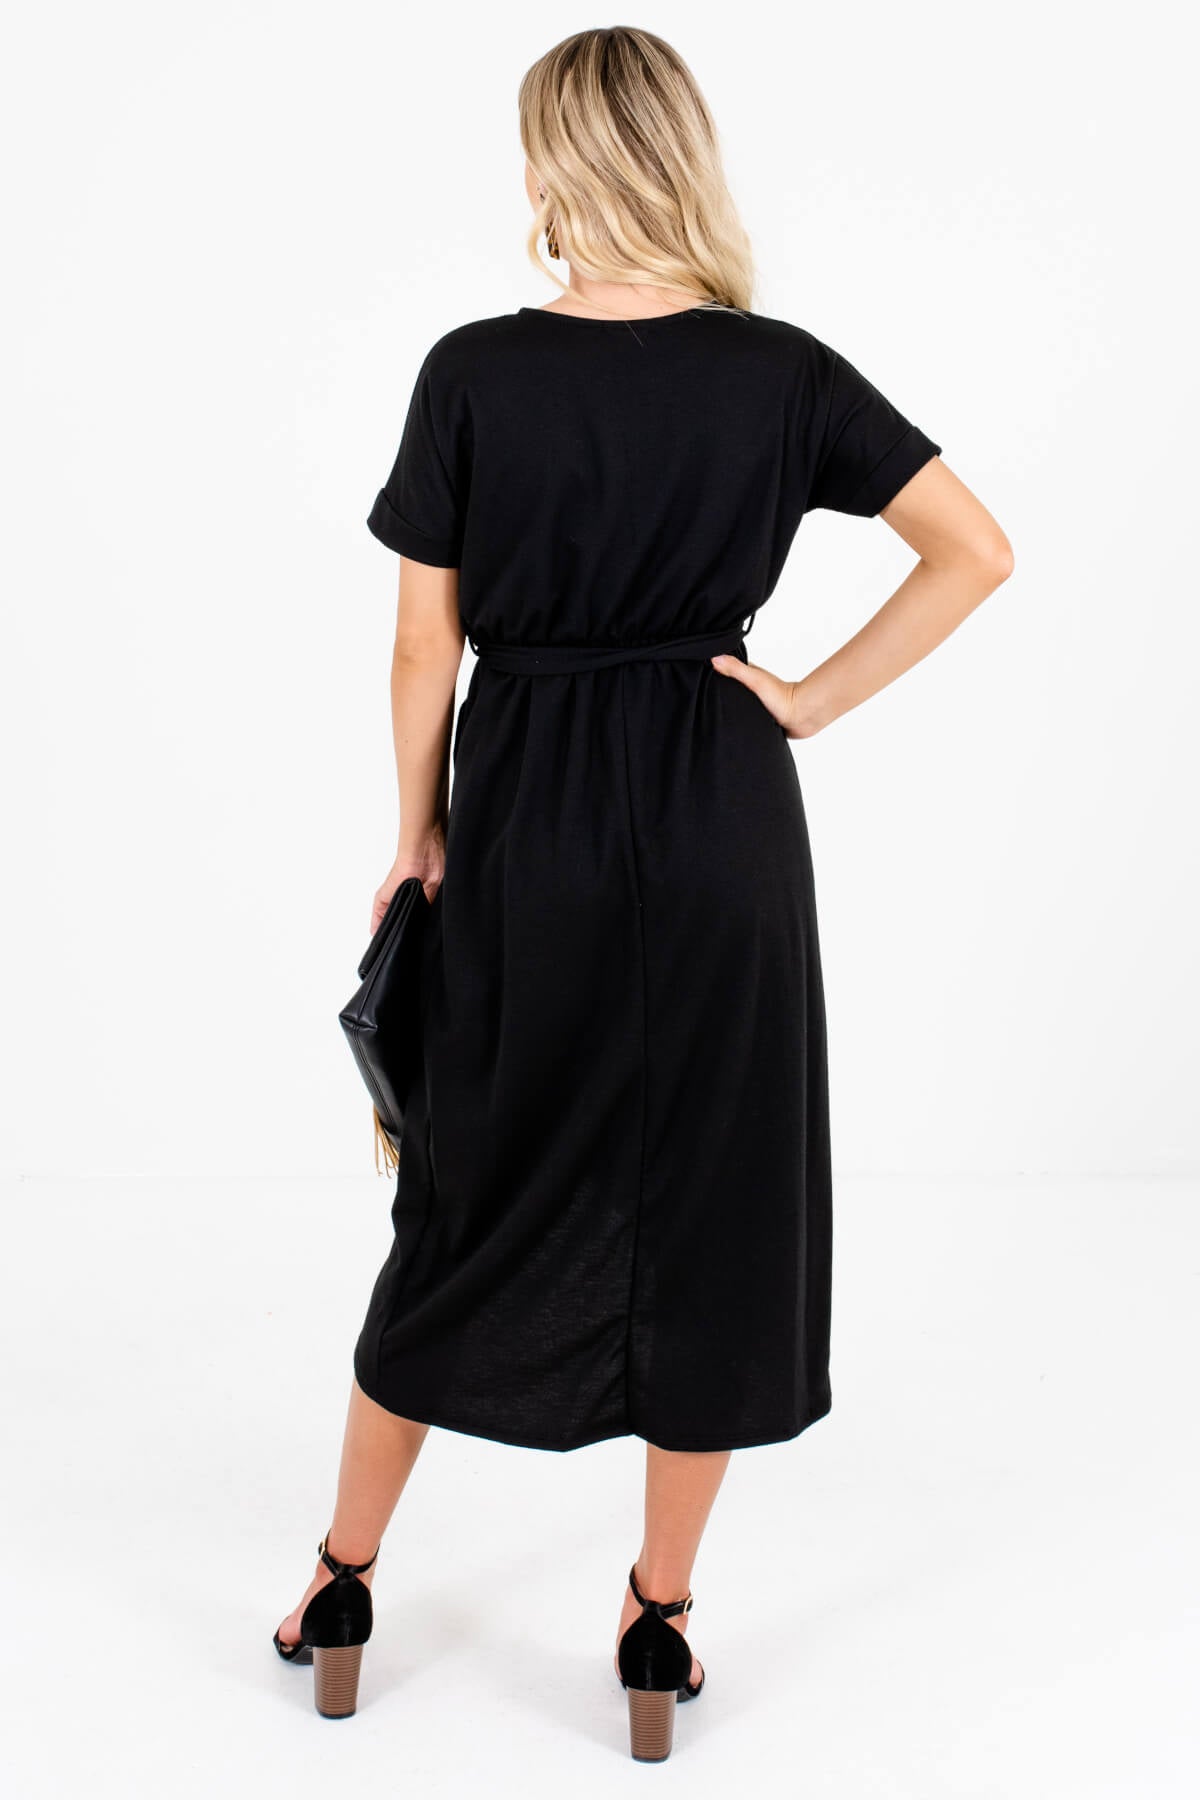 Women's Black Elastic Waistband Boutique Knee-Length Dress